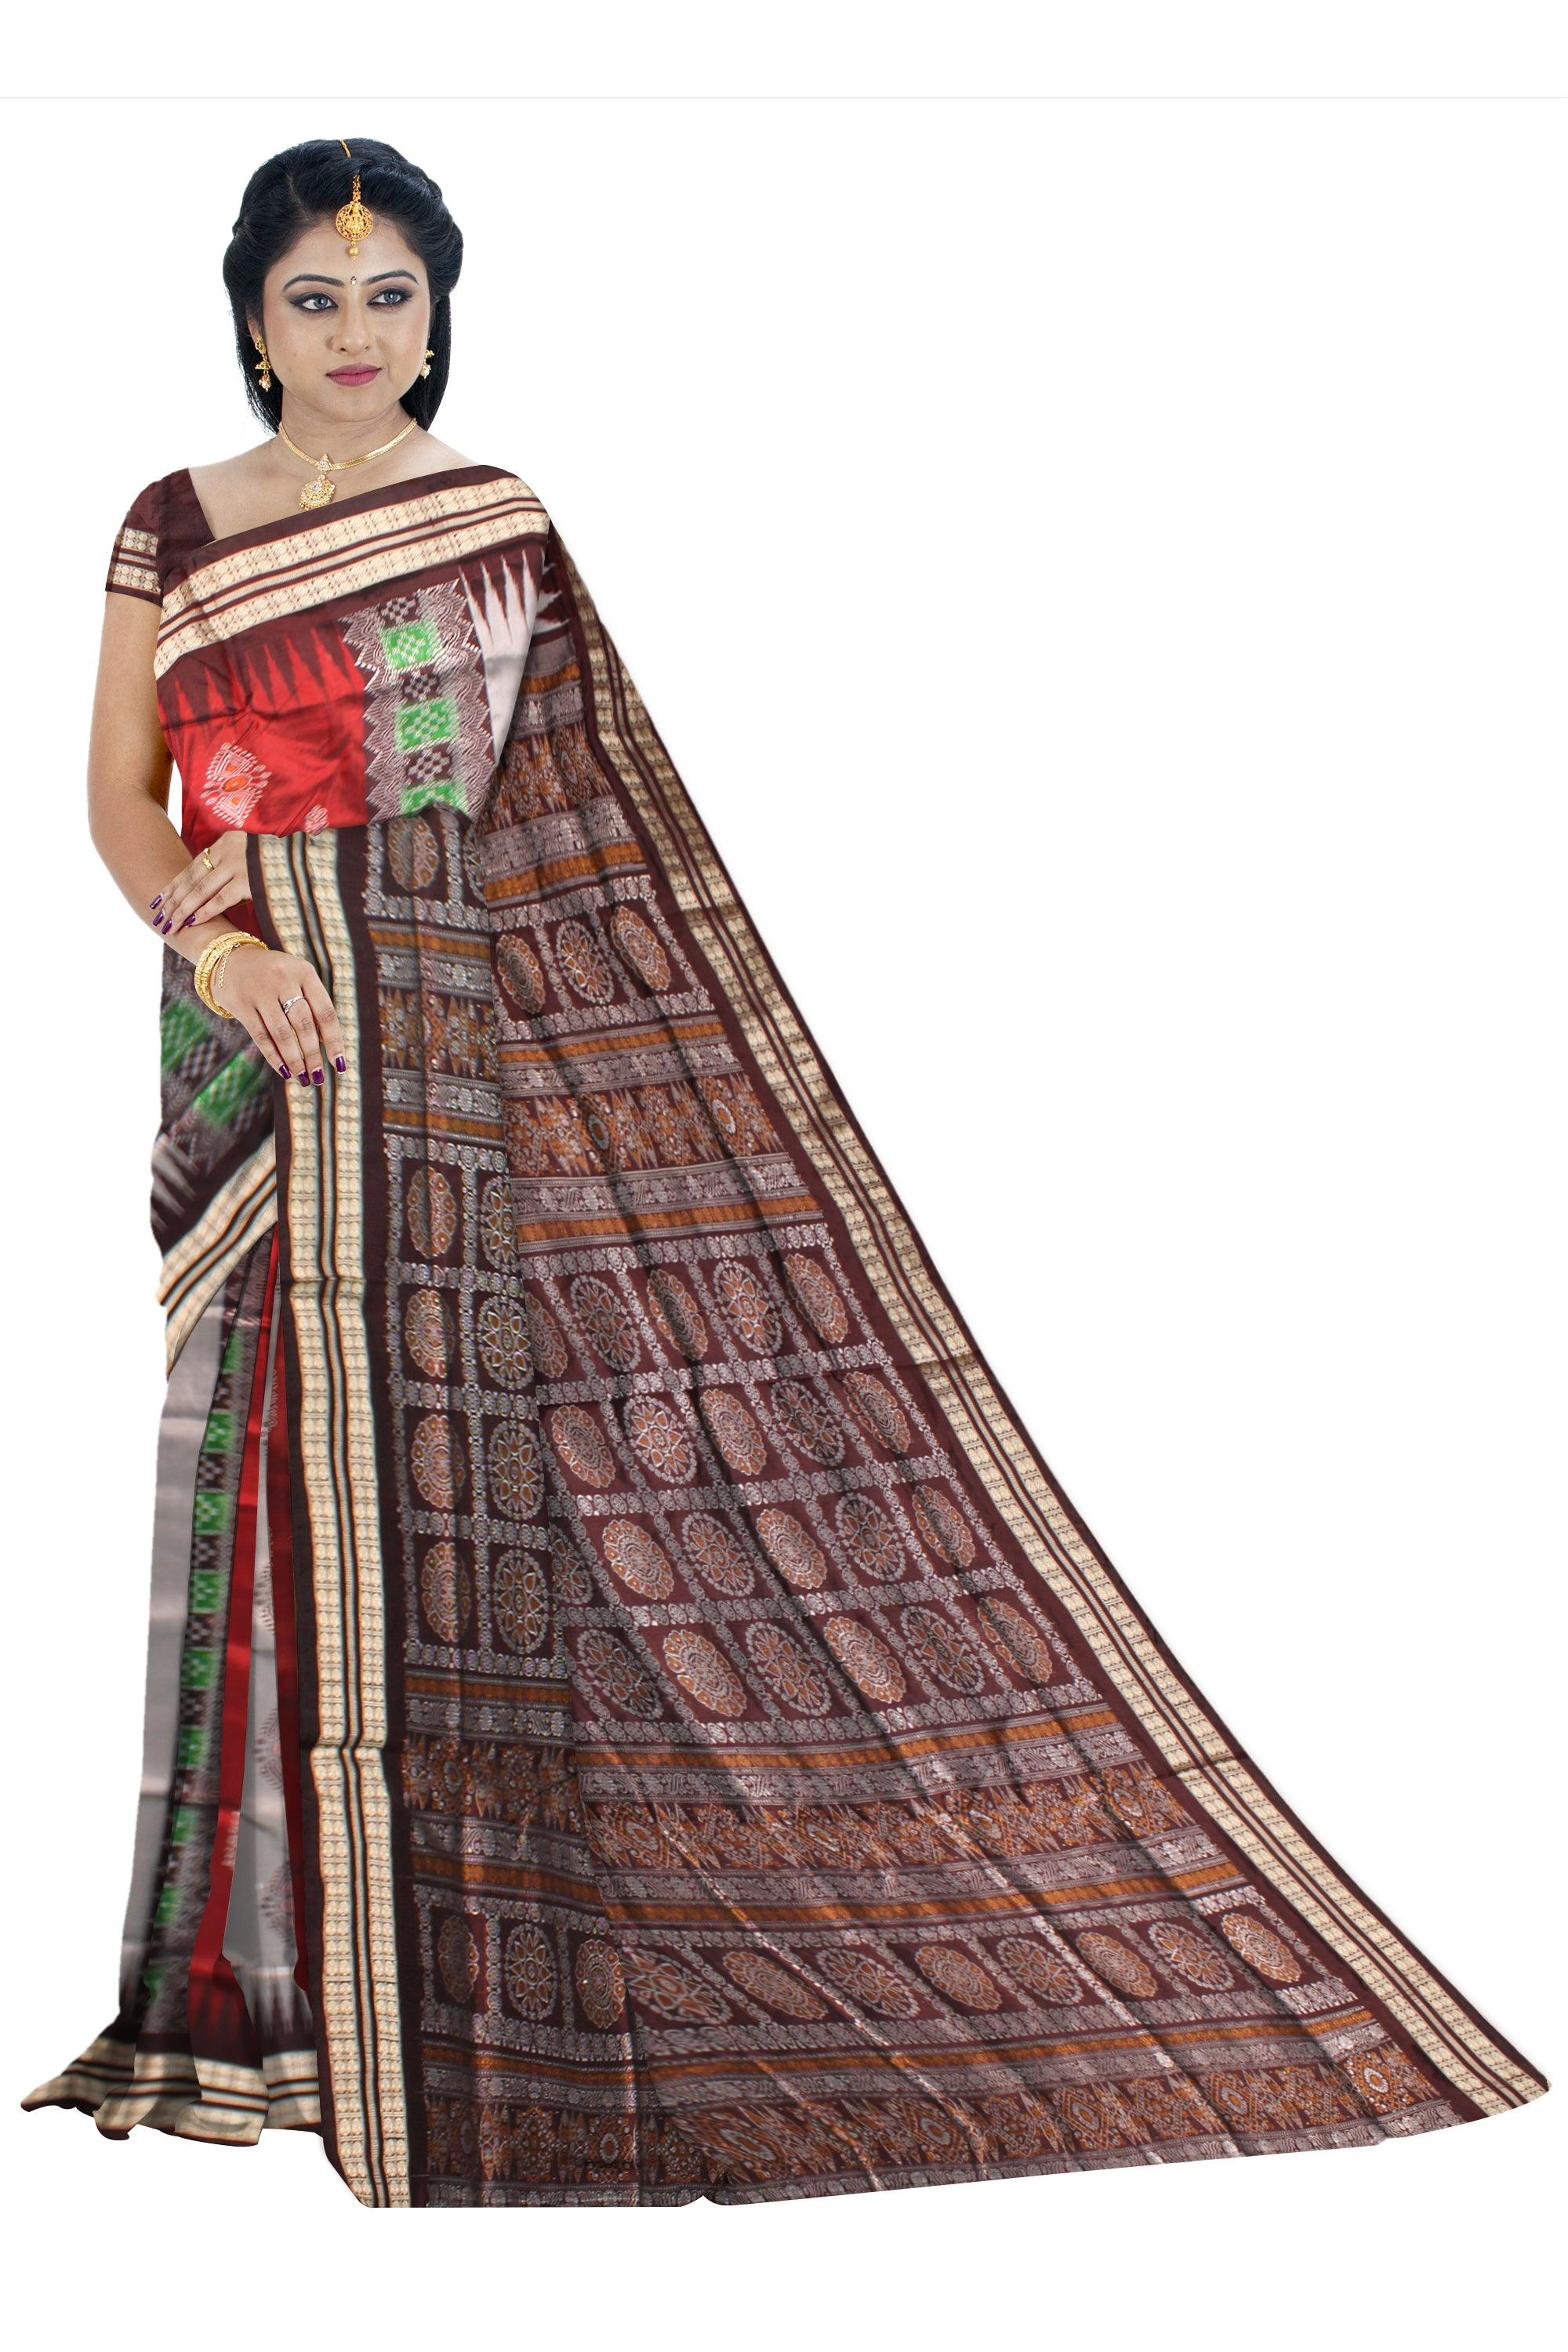 Sambalpuri Pata Saree in Maroon  and Silver Color with Pasapali design. - Koshali Arts & Crafts Enterprise